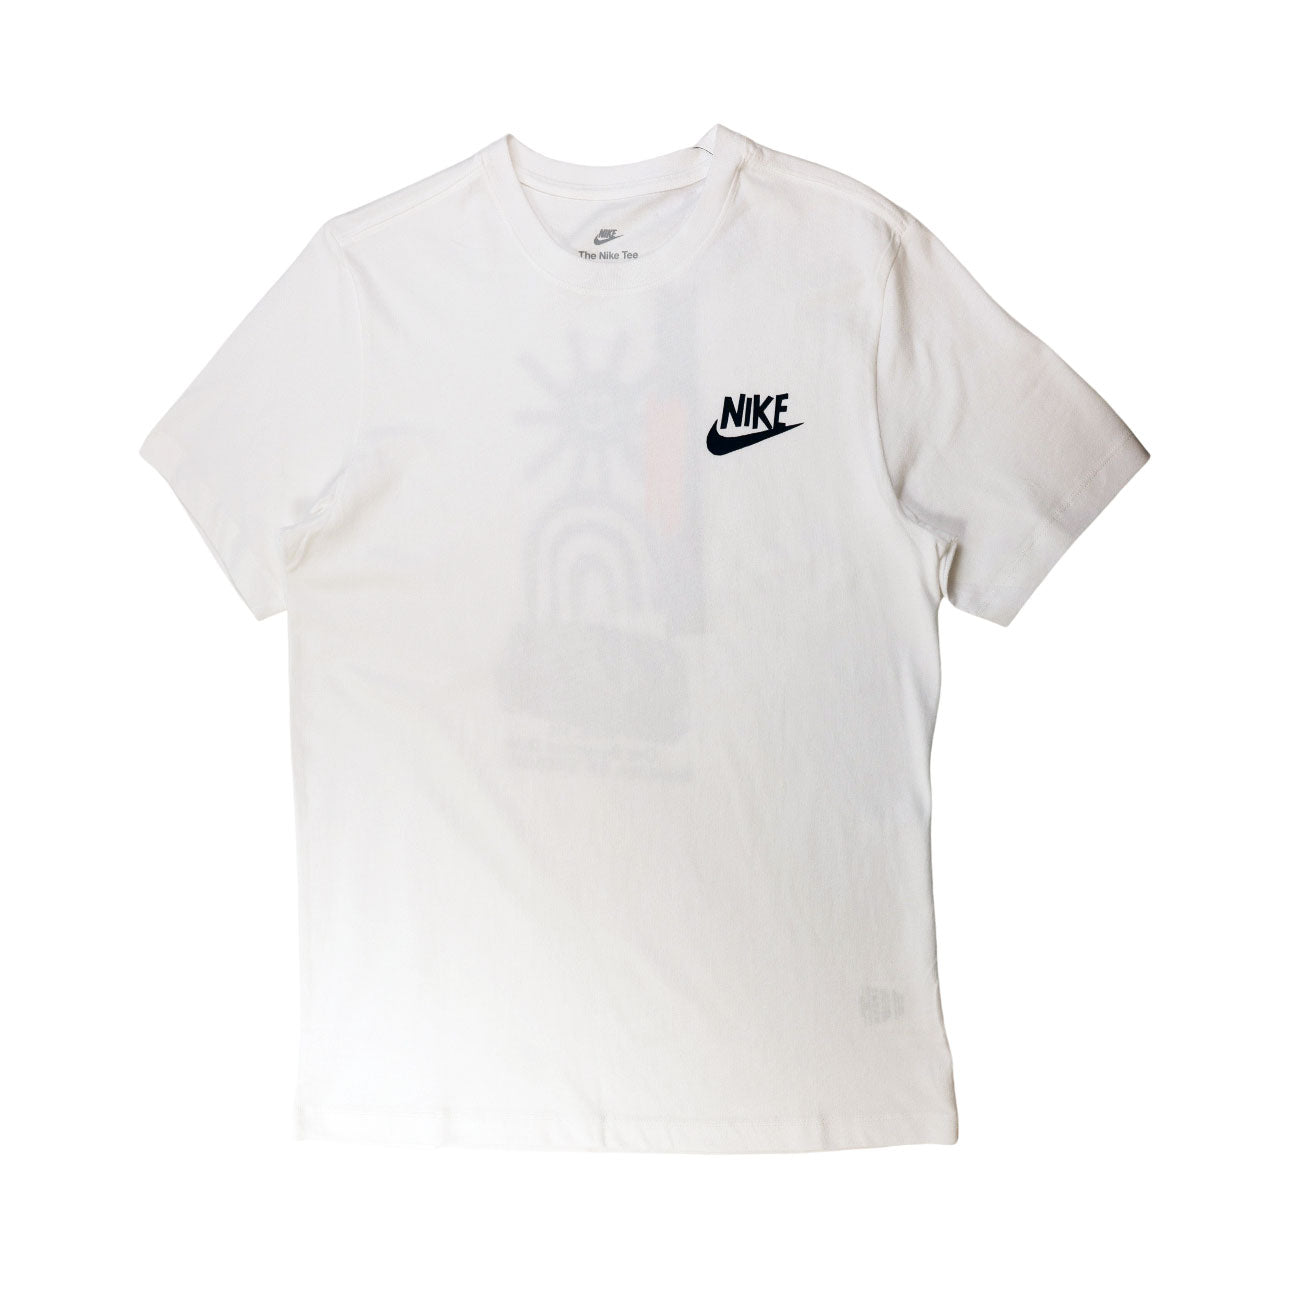 Nike Sportswear Tee (White) – Burn Rubber